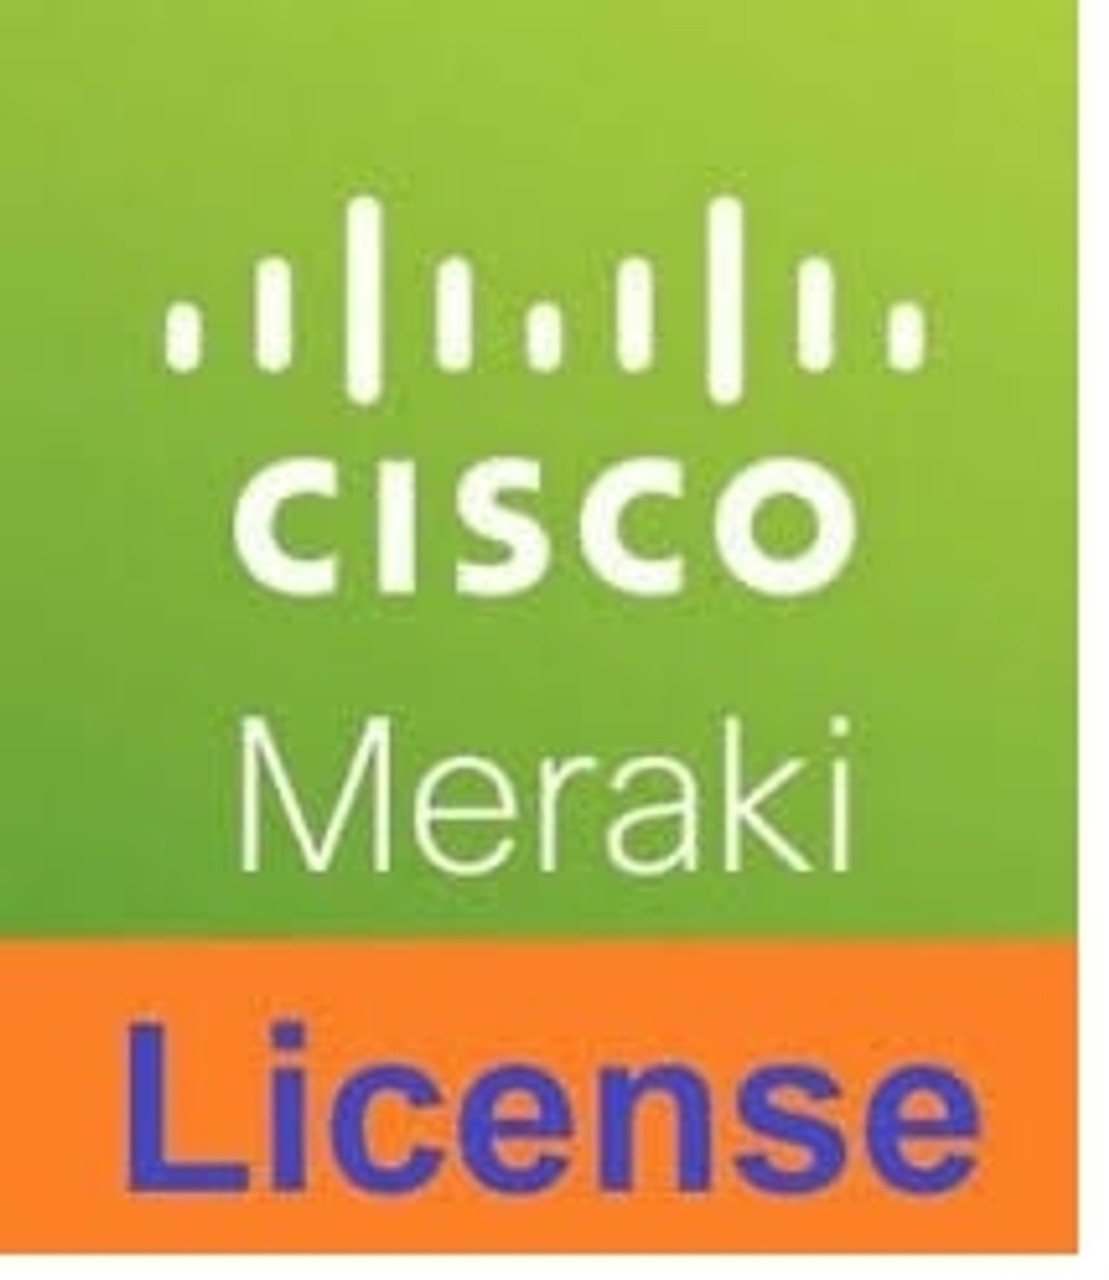 EOS Meraki Z1 Enterprise License and Support, 3 Year